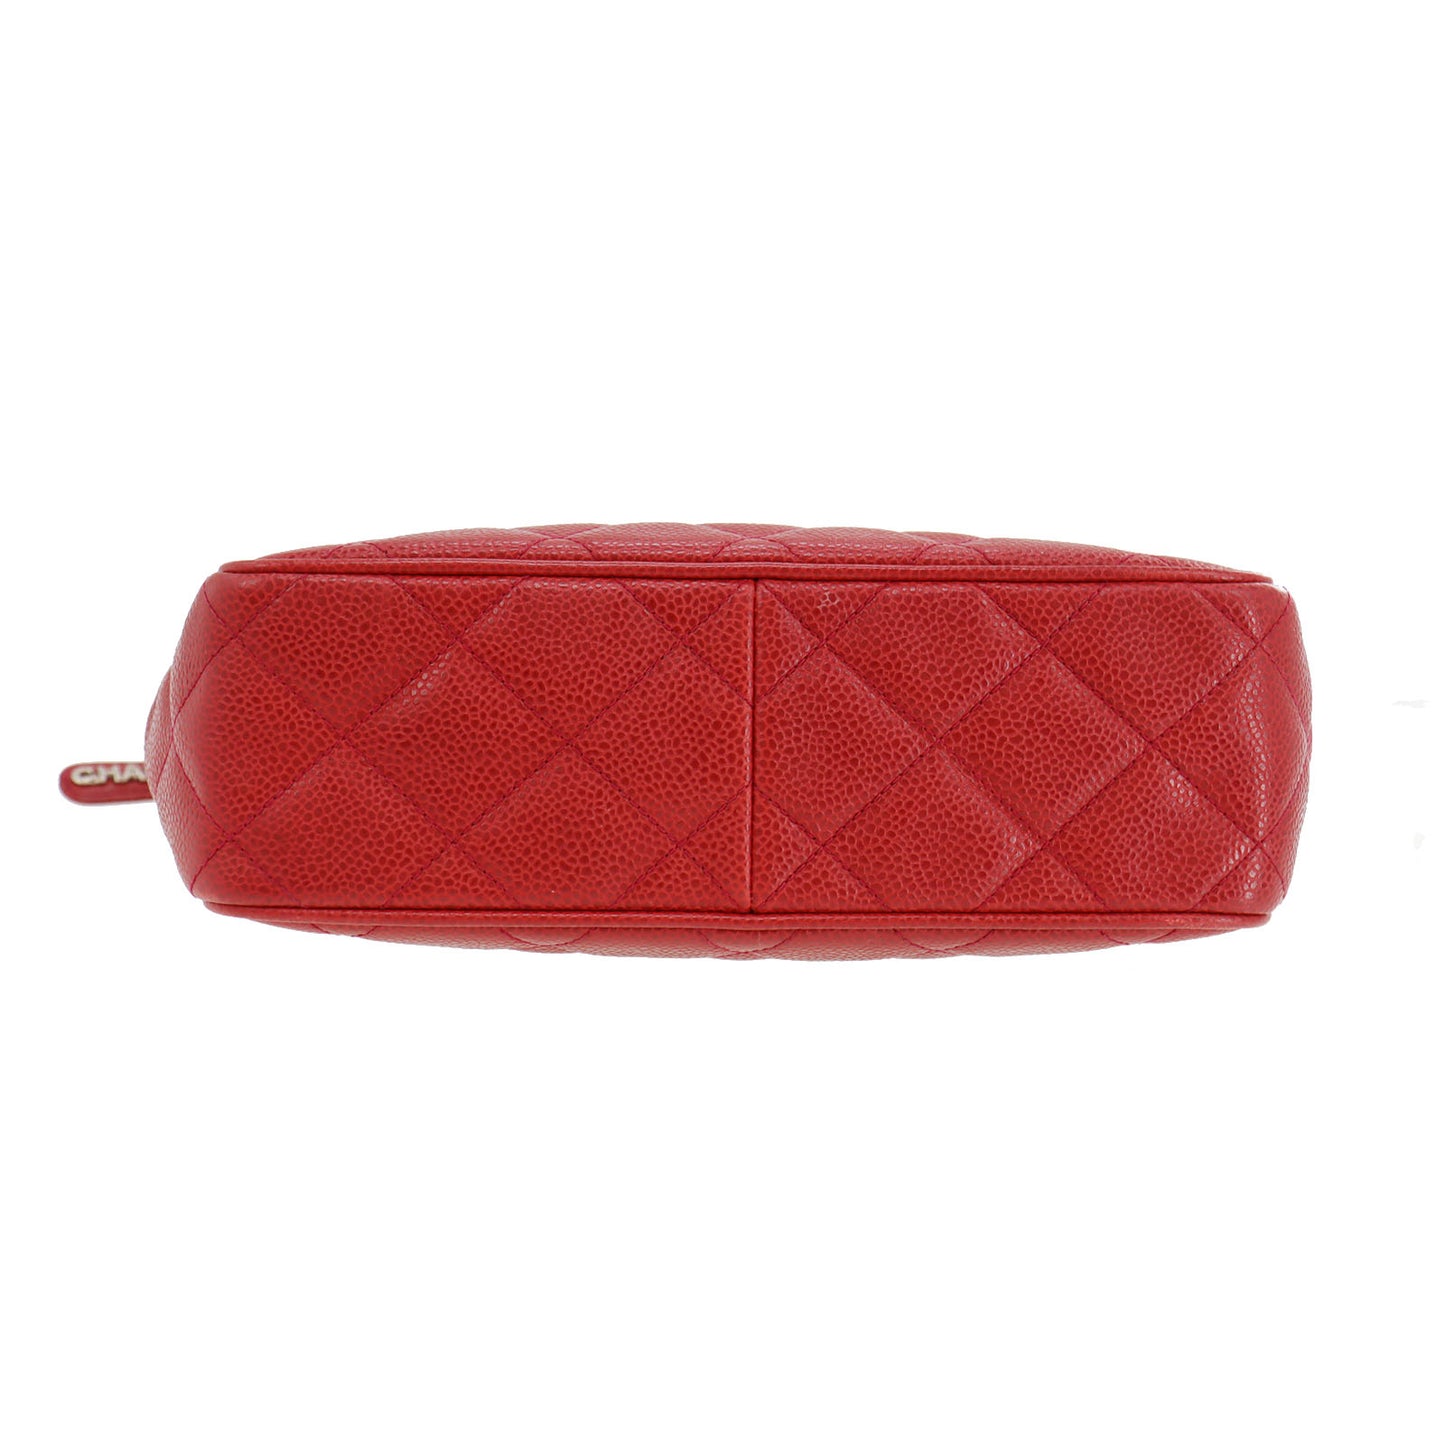 CHANEL CC Handbag Red Caviar Skin Leather #CD84